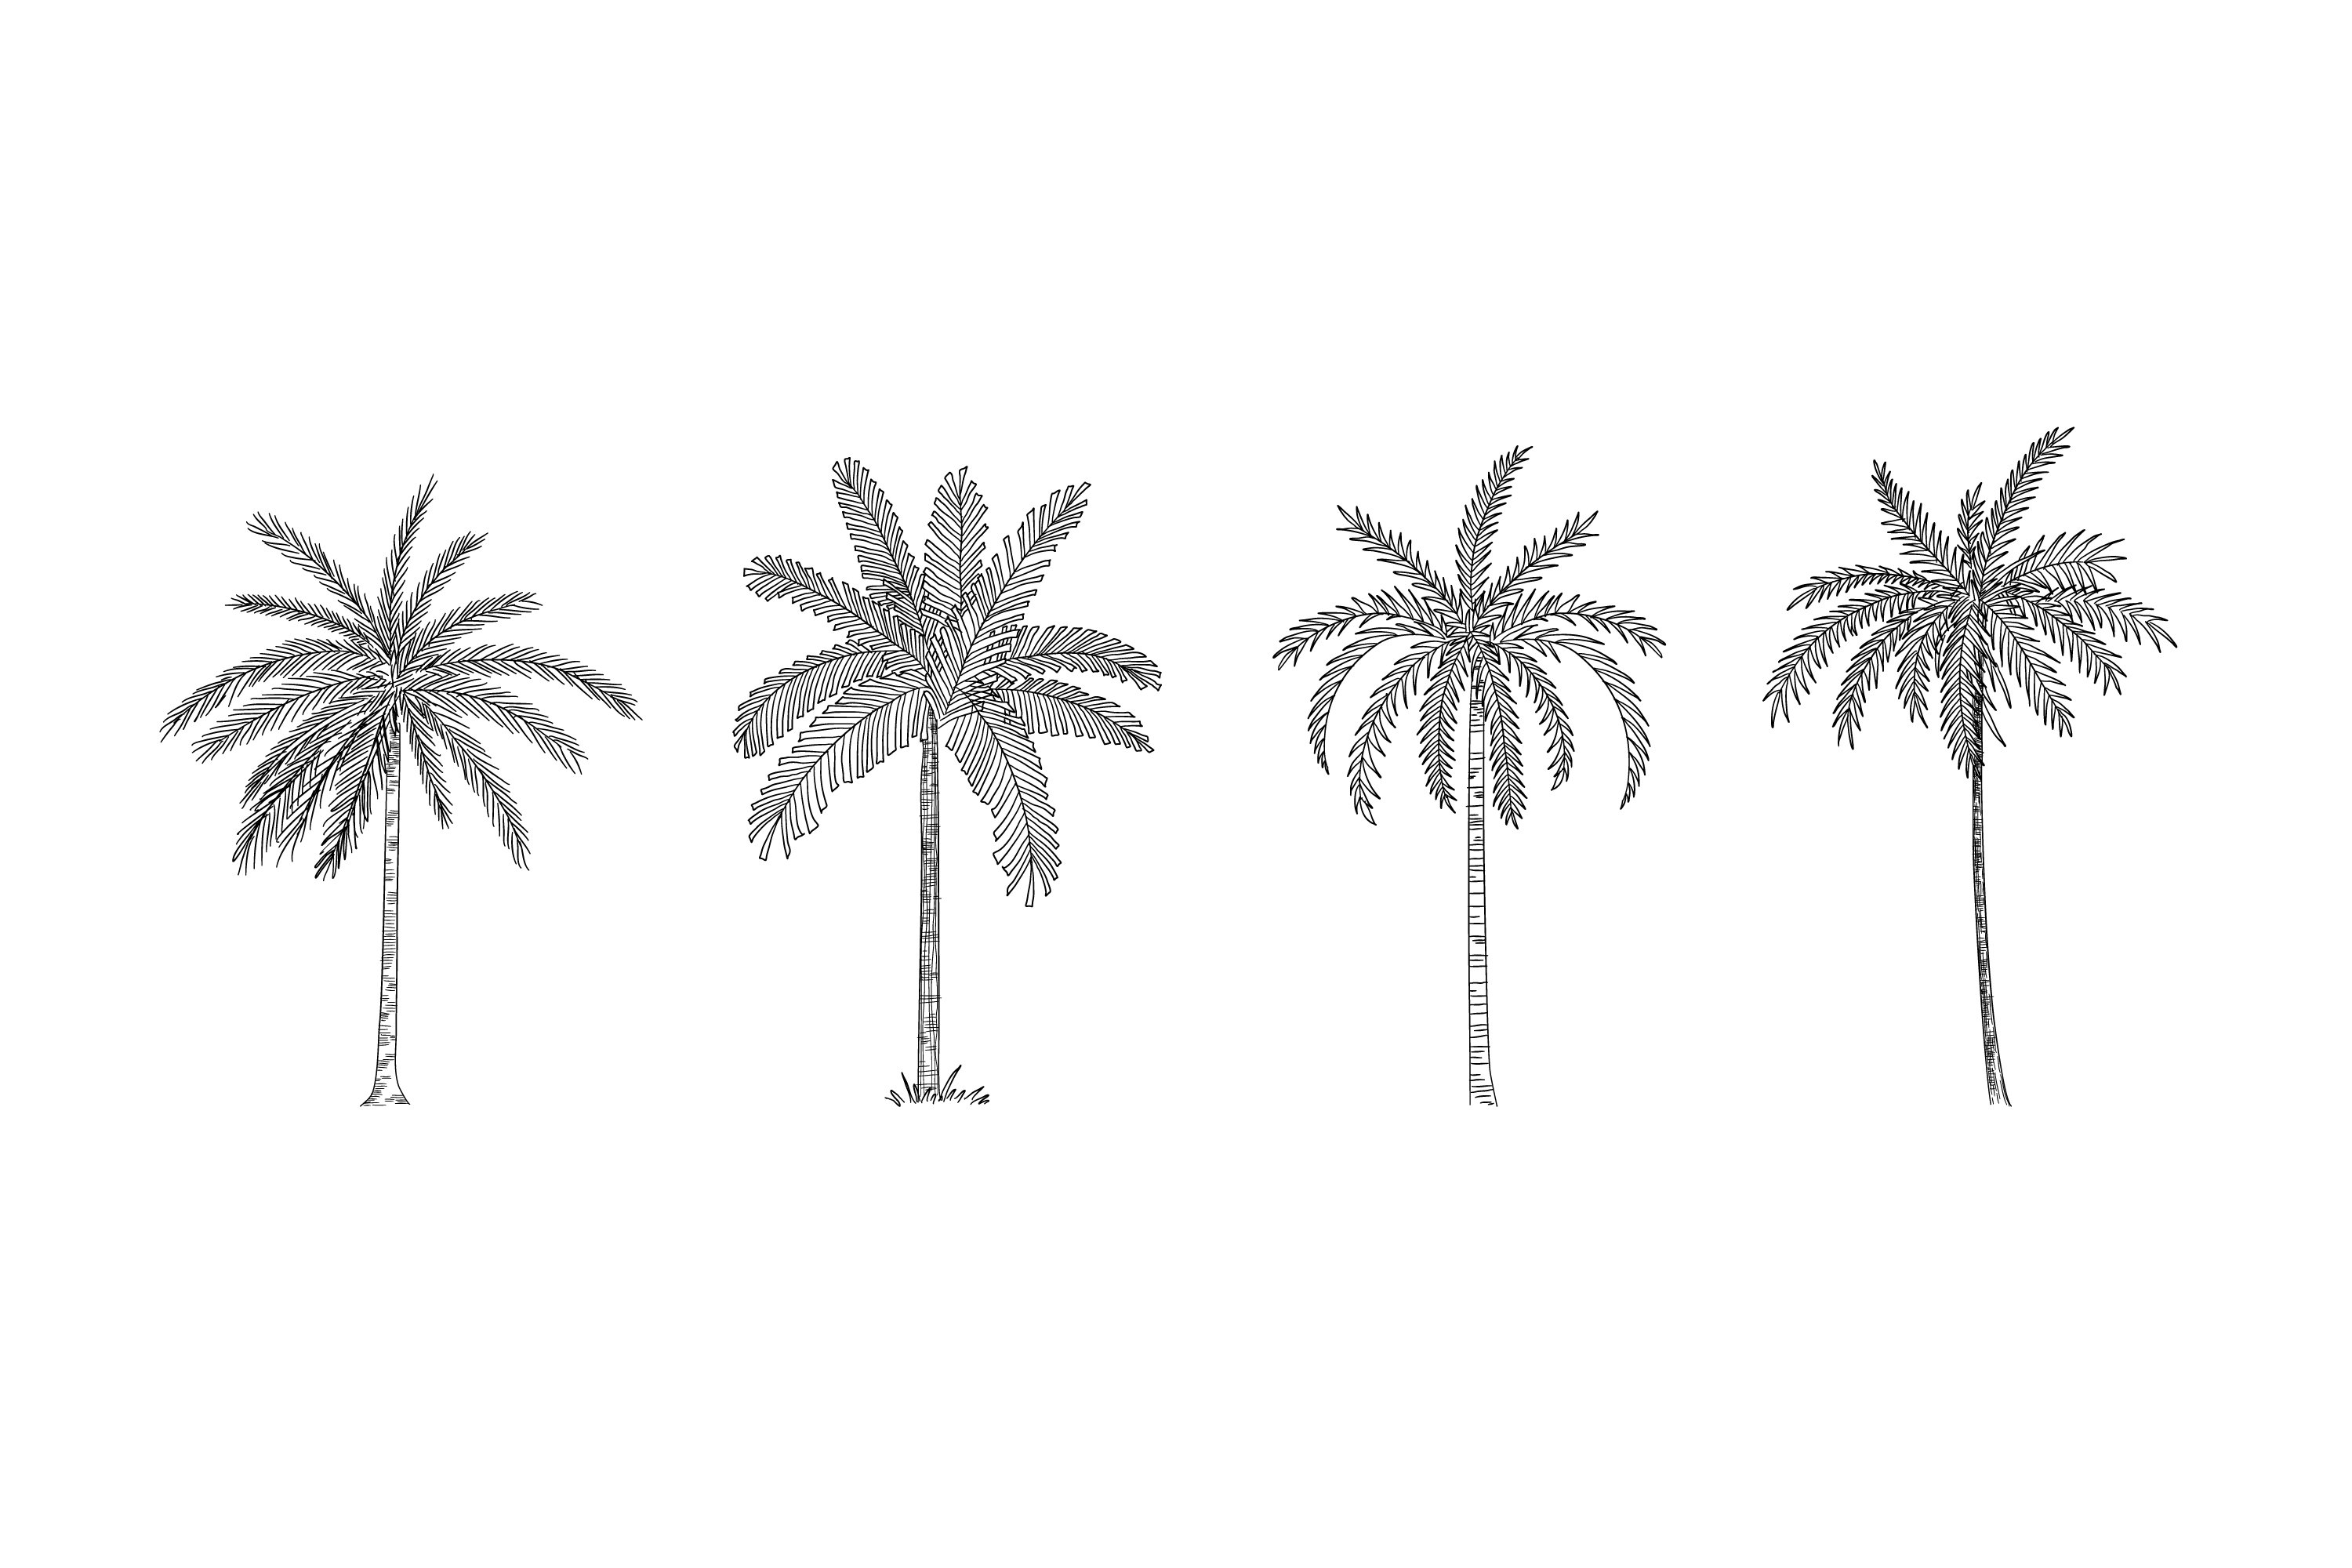 Tree Sketch 02 Single Palm Tree  Apolo Prints  Drawings  Illustration  Flowers Plants  Trees Trees  Shrubs Palm Trees  ArtPal